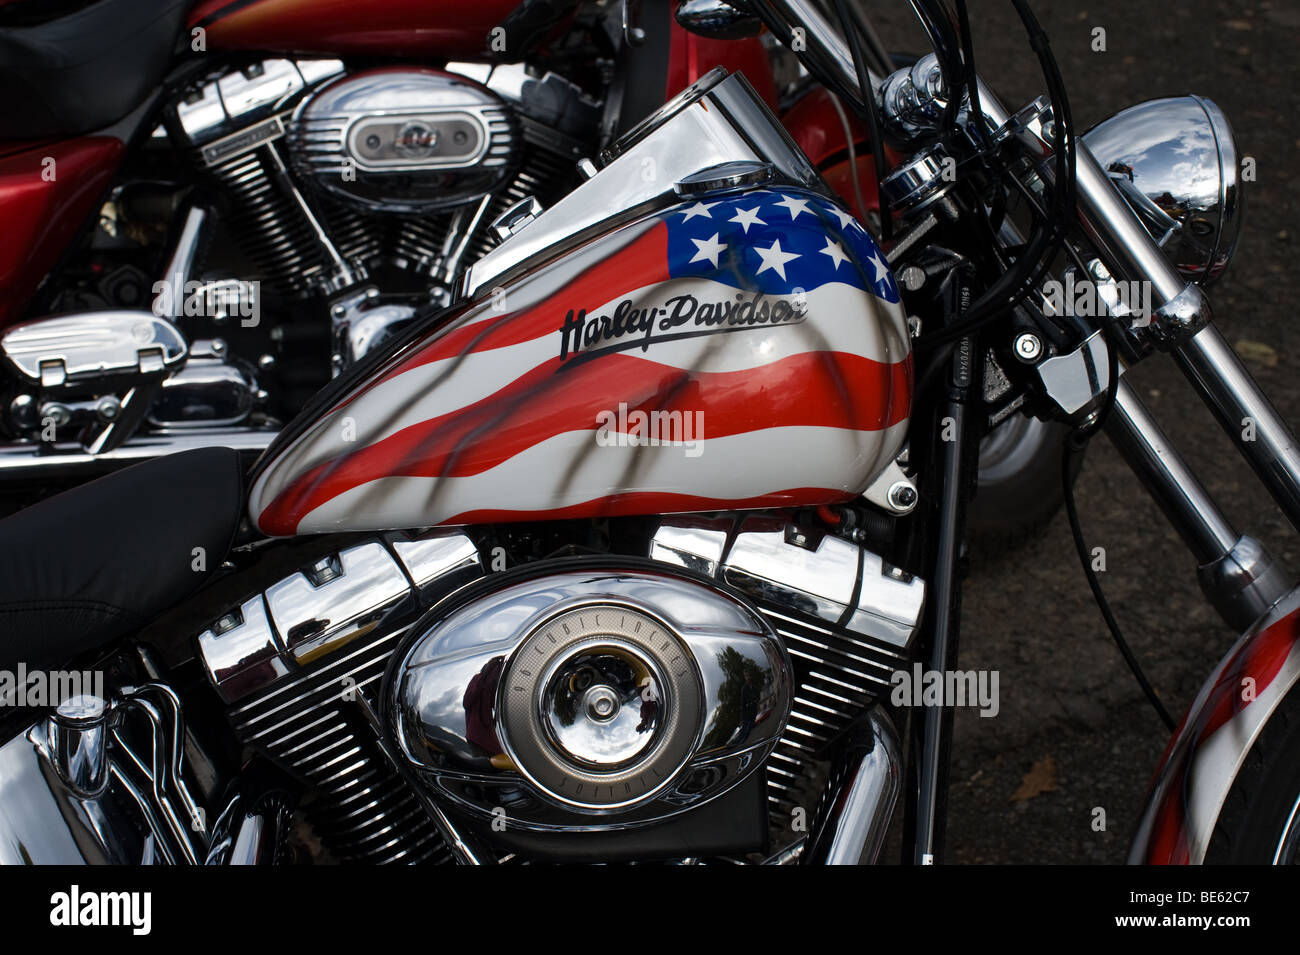 Bandierina bandiera inglese cuciture rinforzate per Flag-Moto Harley-custom e ideali ... 